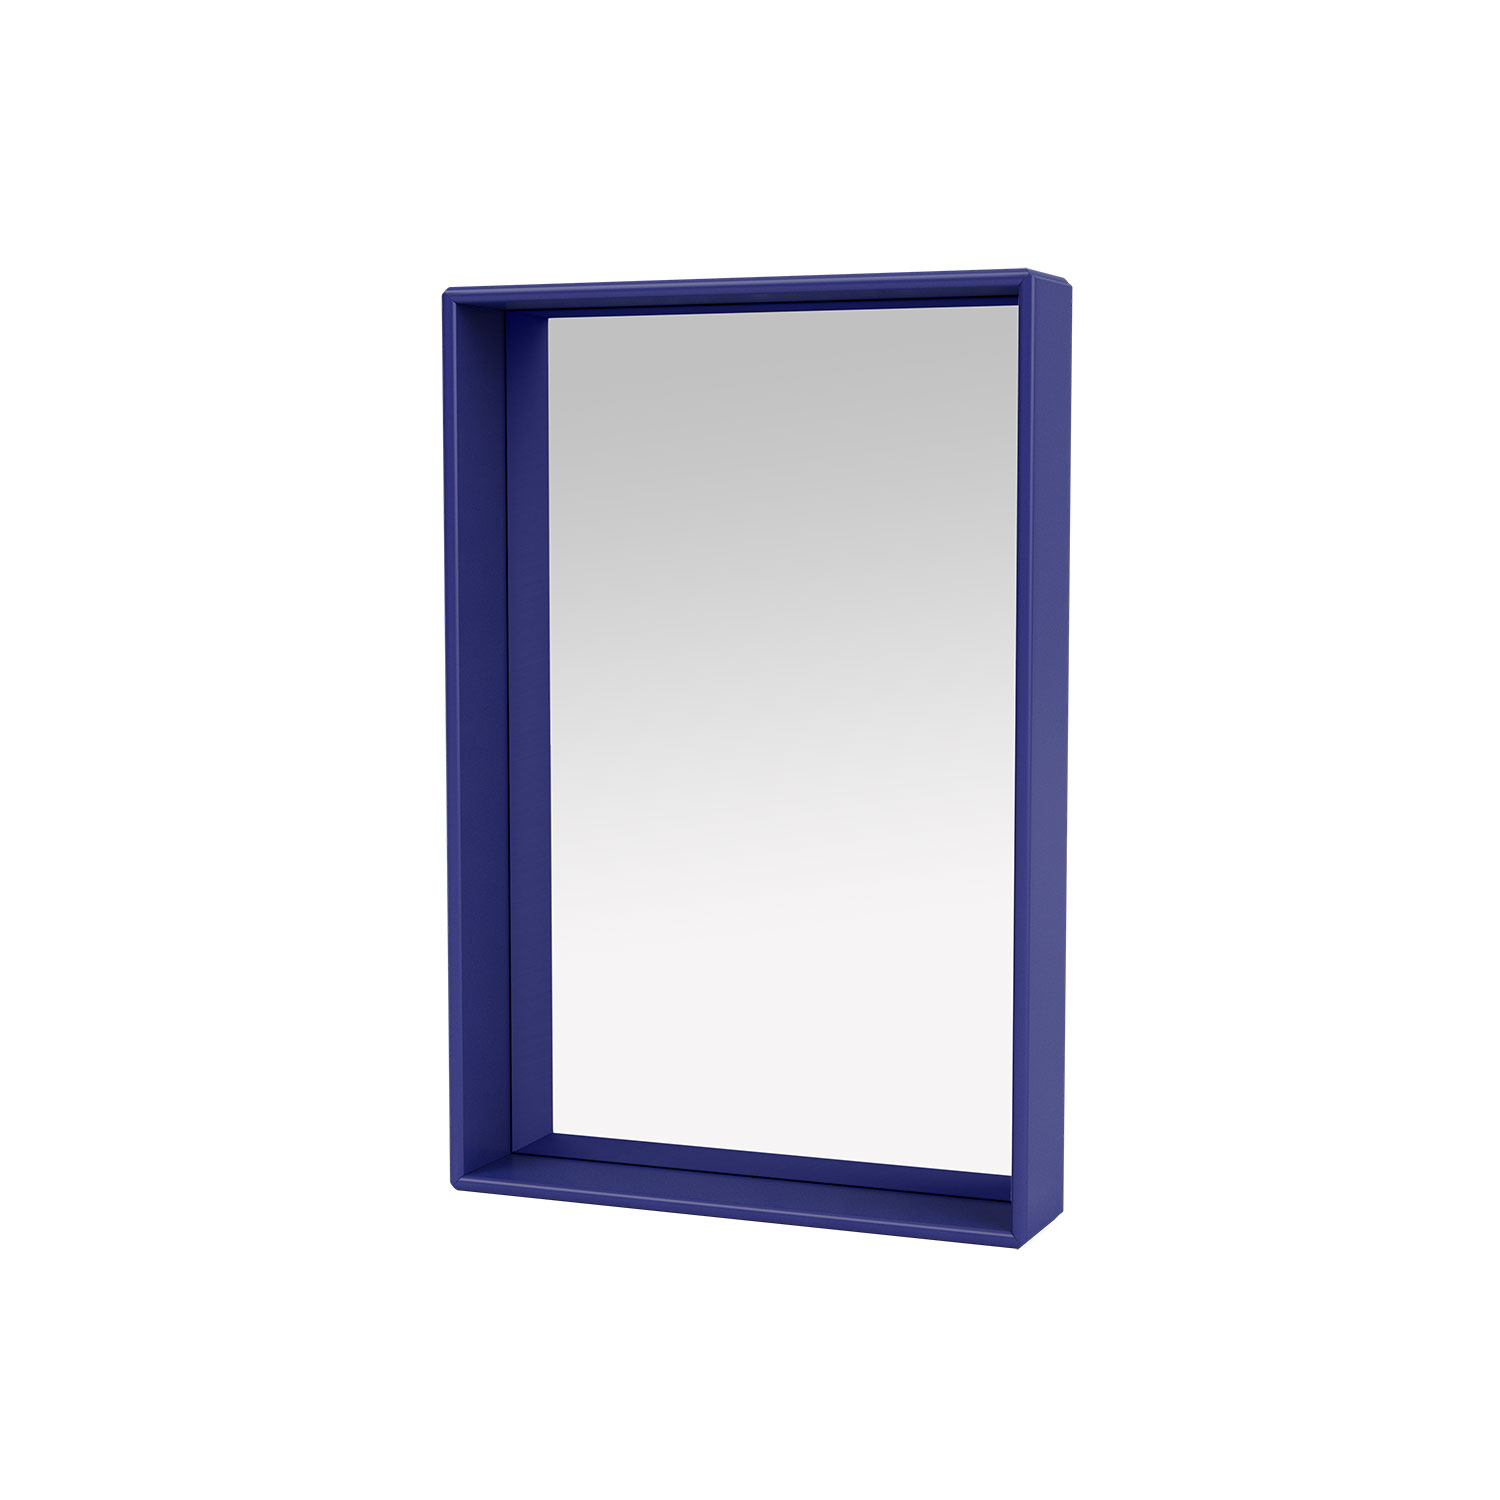 SHELFIE mirror with shelf, 7 colors